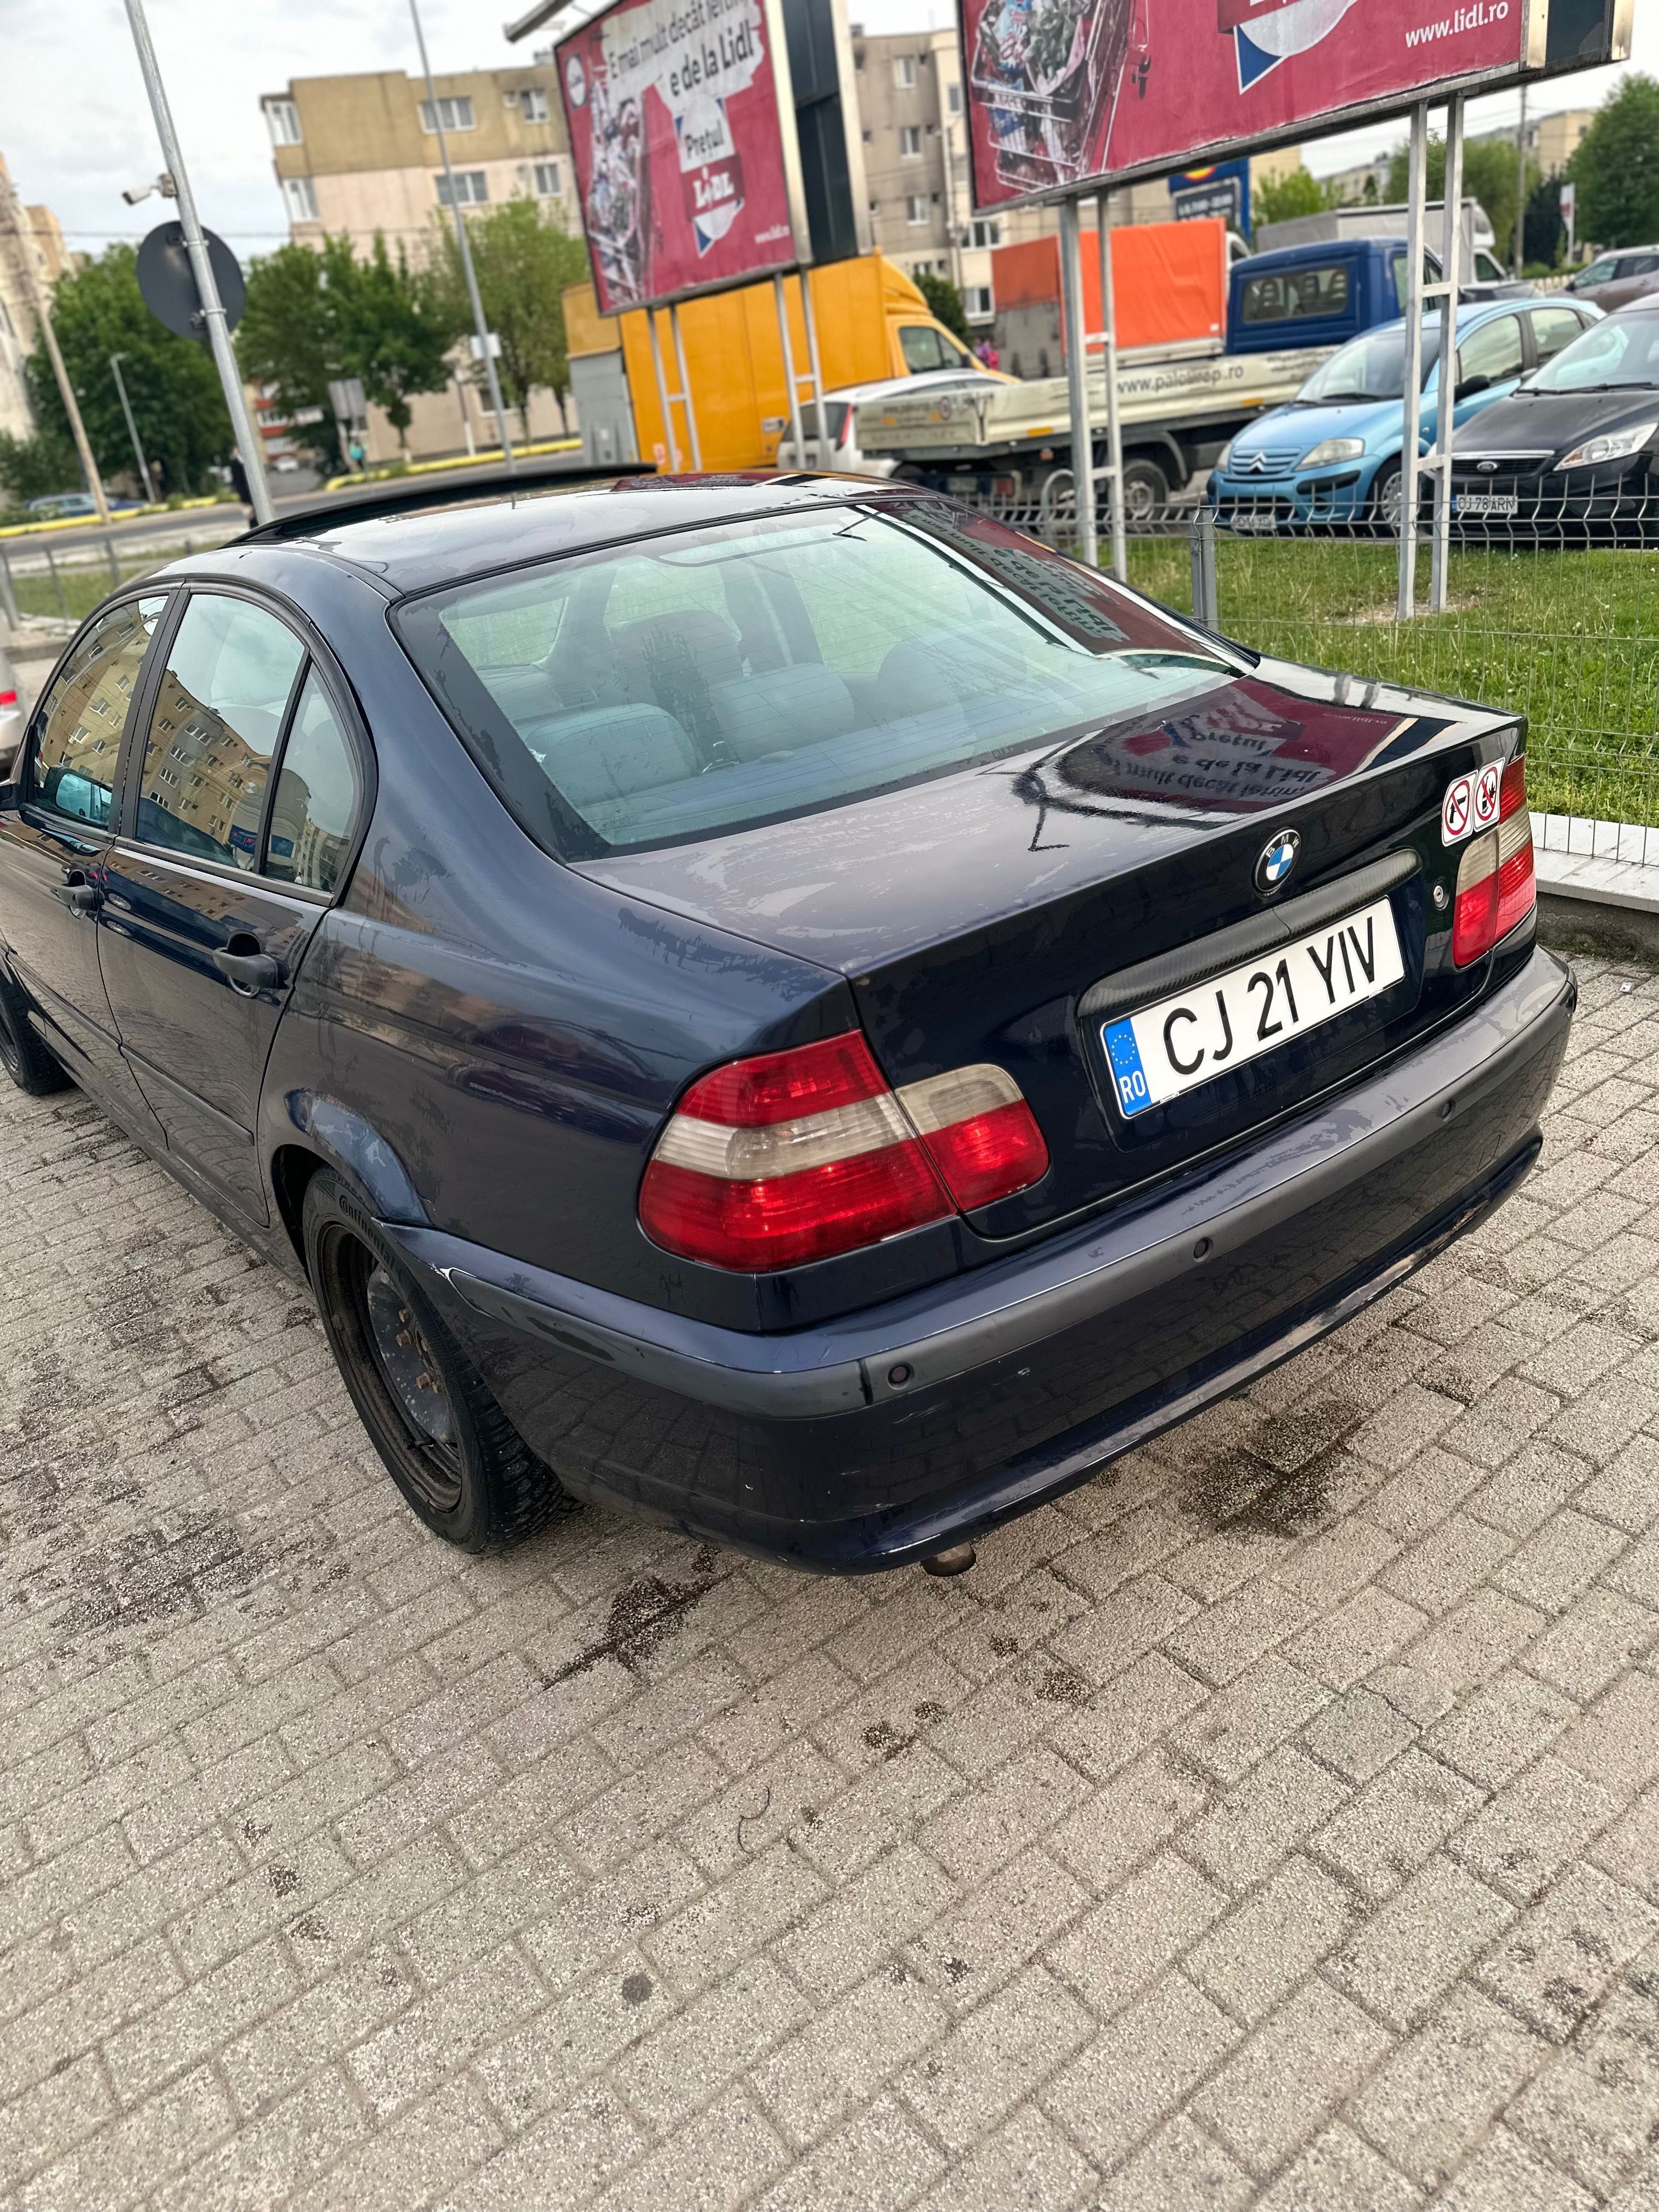 BMW 320d facelift